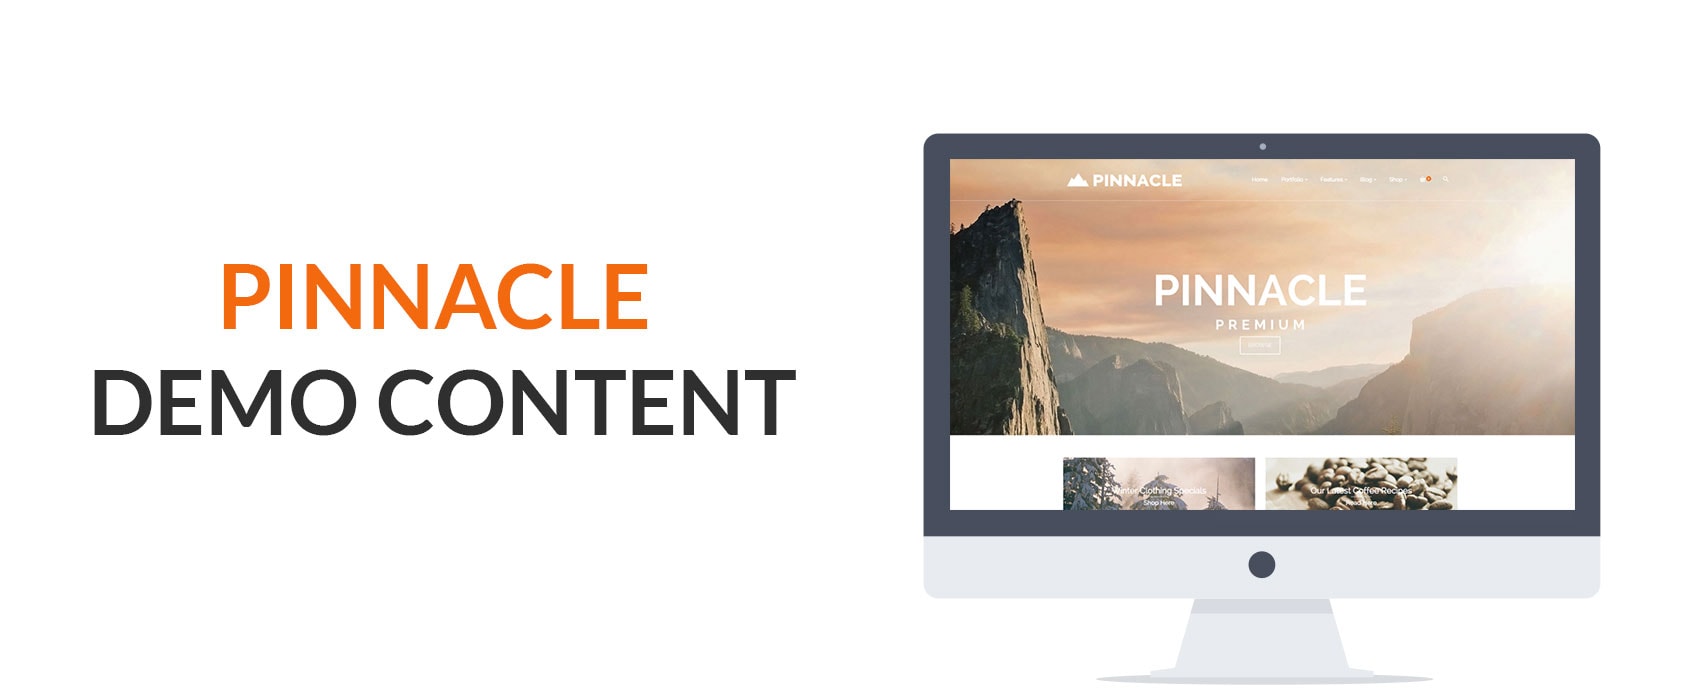 Demo Content for Pinnacle Premium